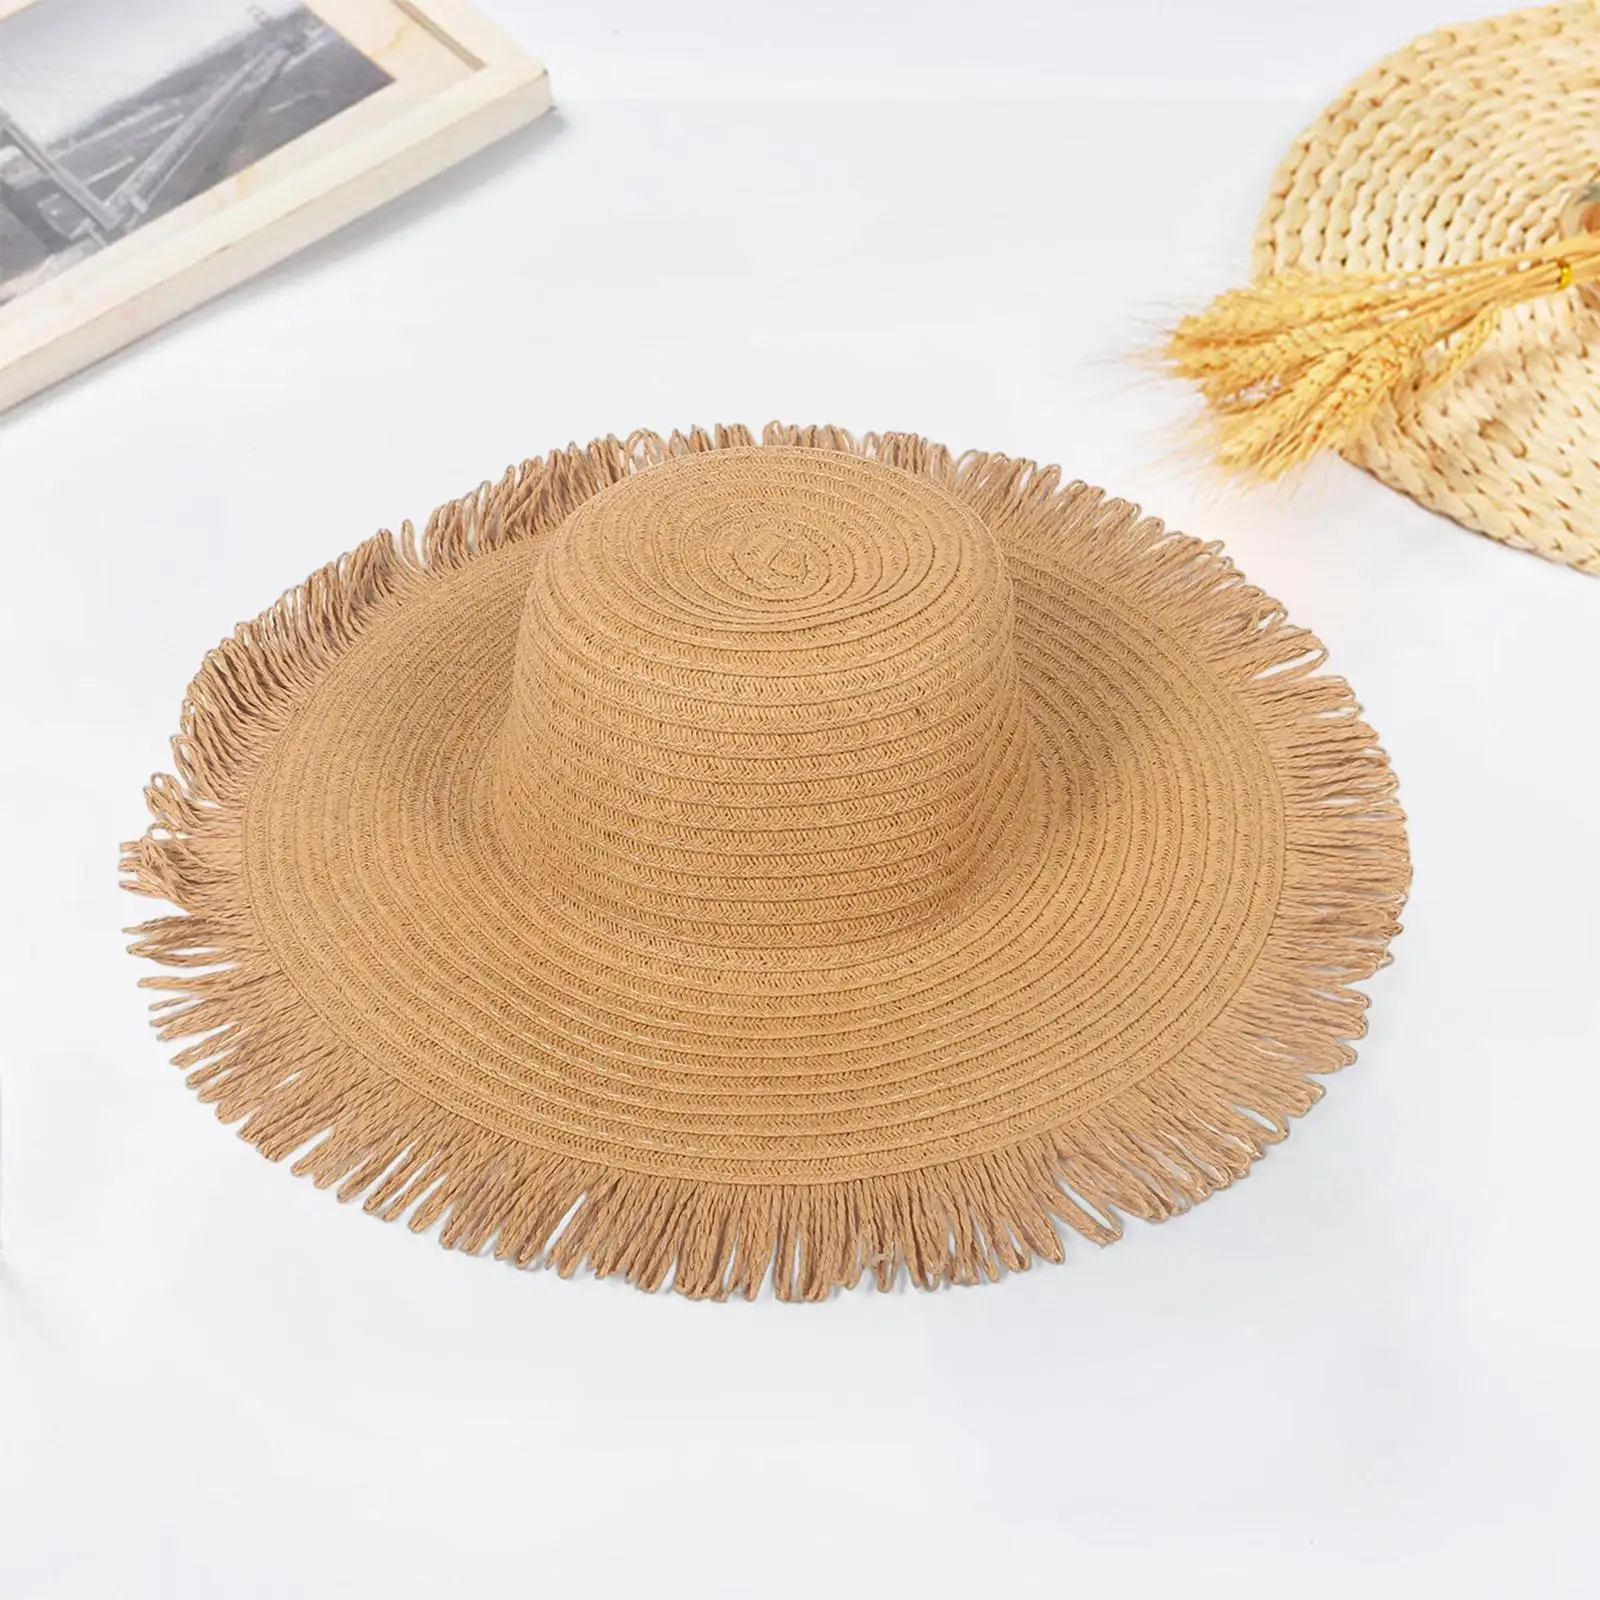 Straw Sun Hat, Sun Protective Wide Tassels Brim 18